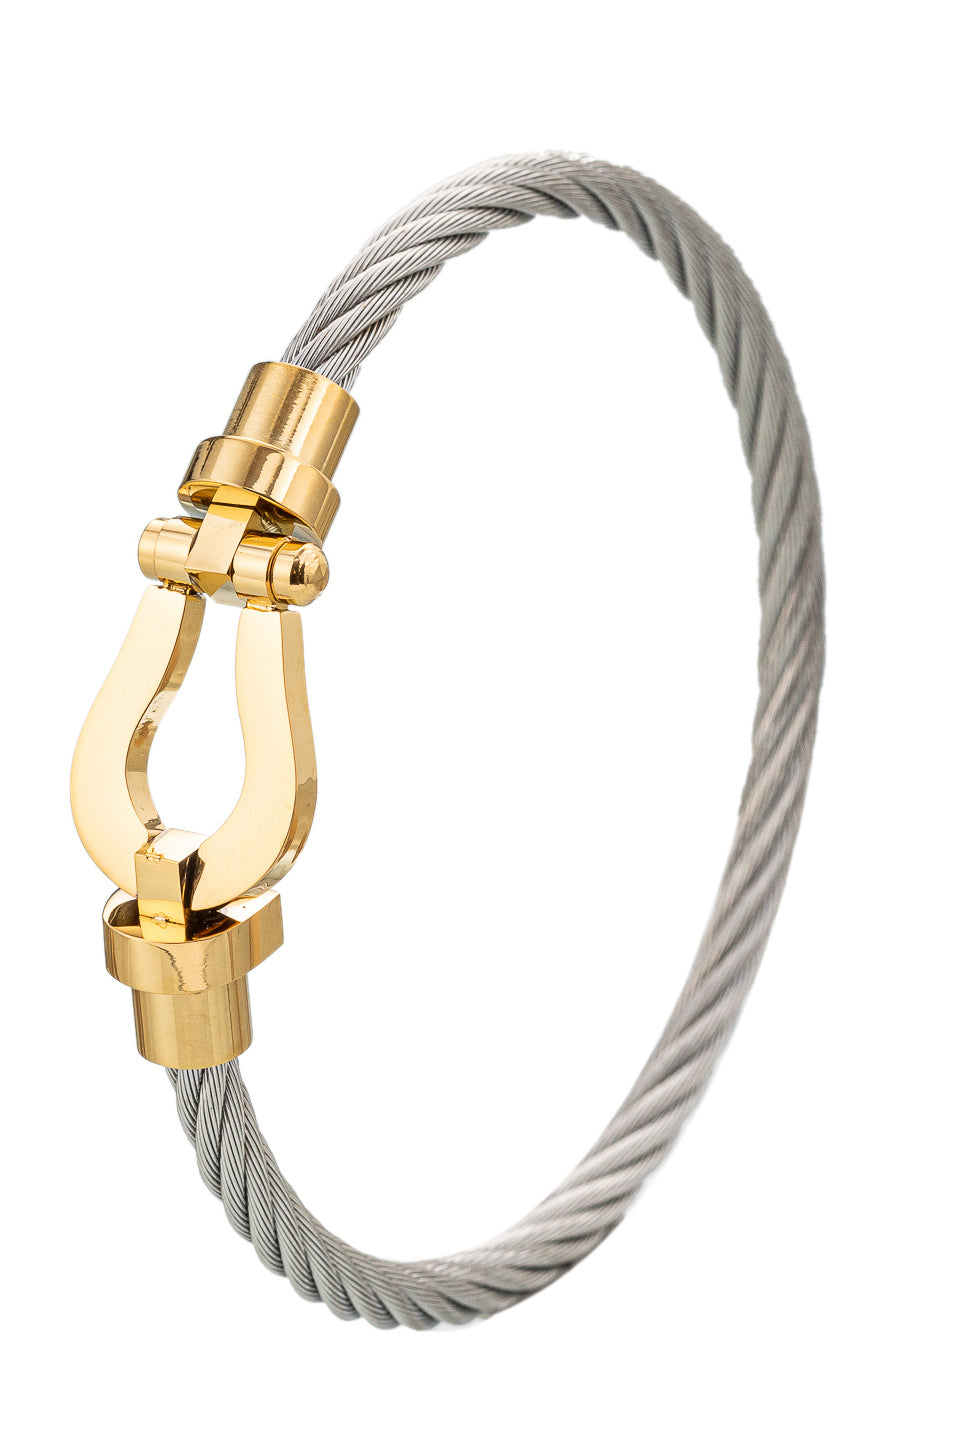 Silver tone titanium wire bracelet with a gold clasp.